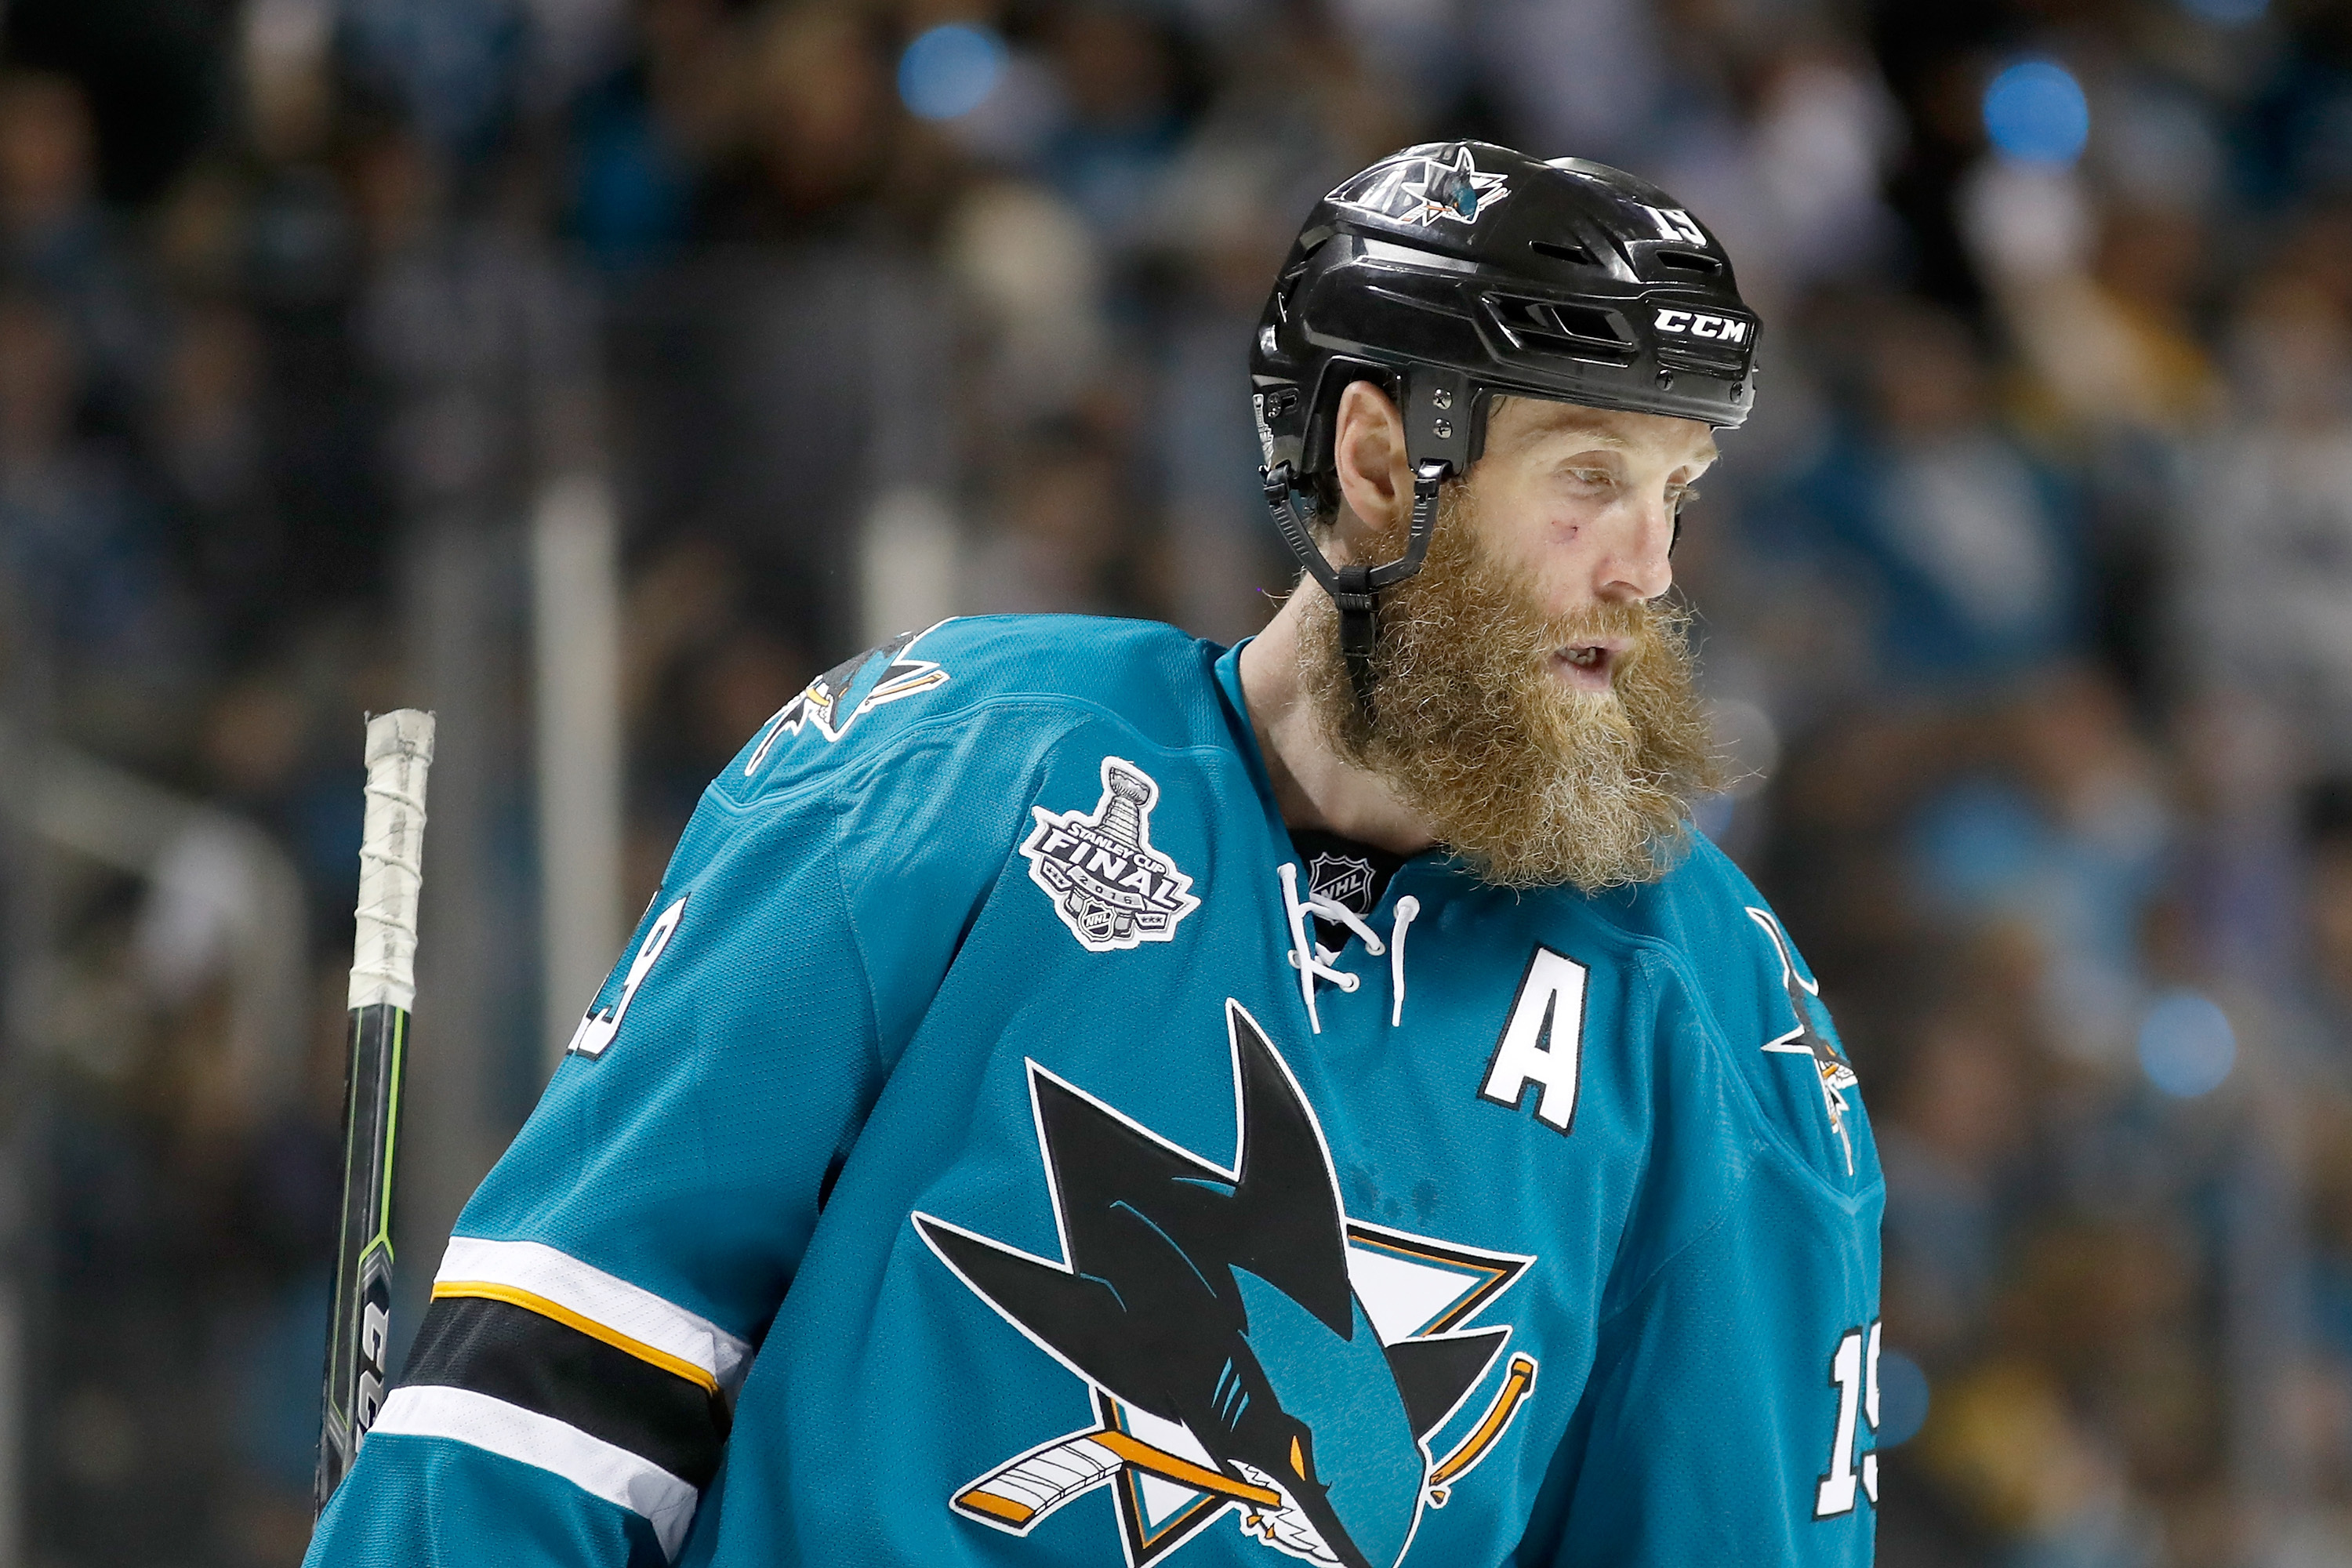 Joe Thornton's beard loses battle, Sharks center wins war